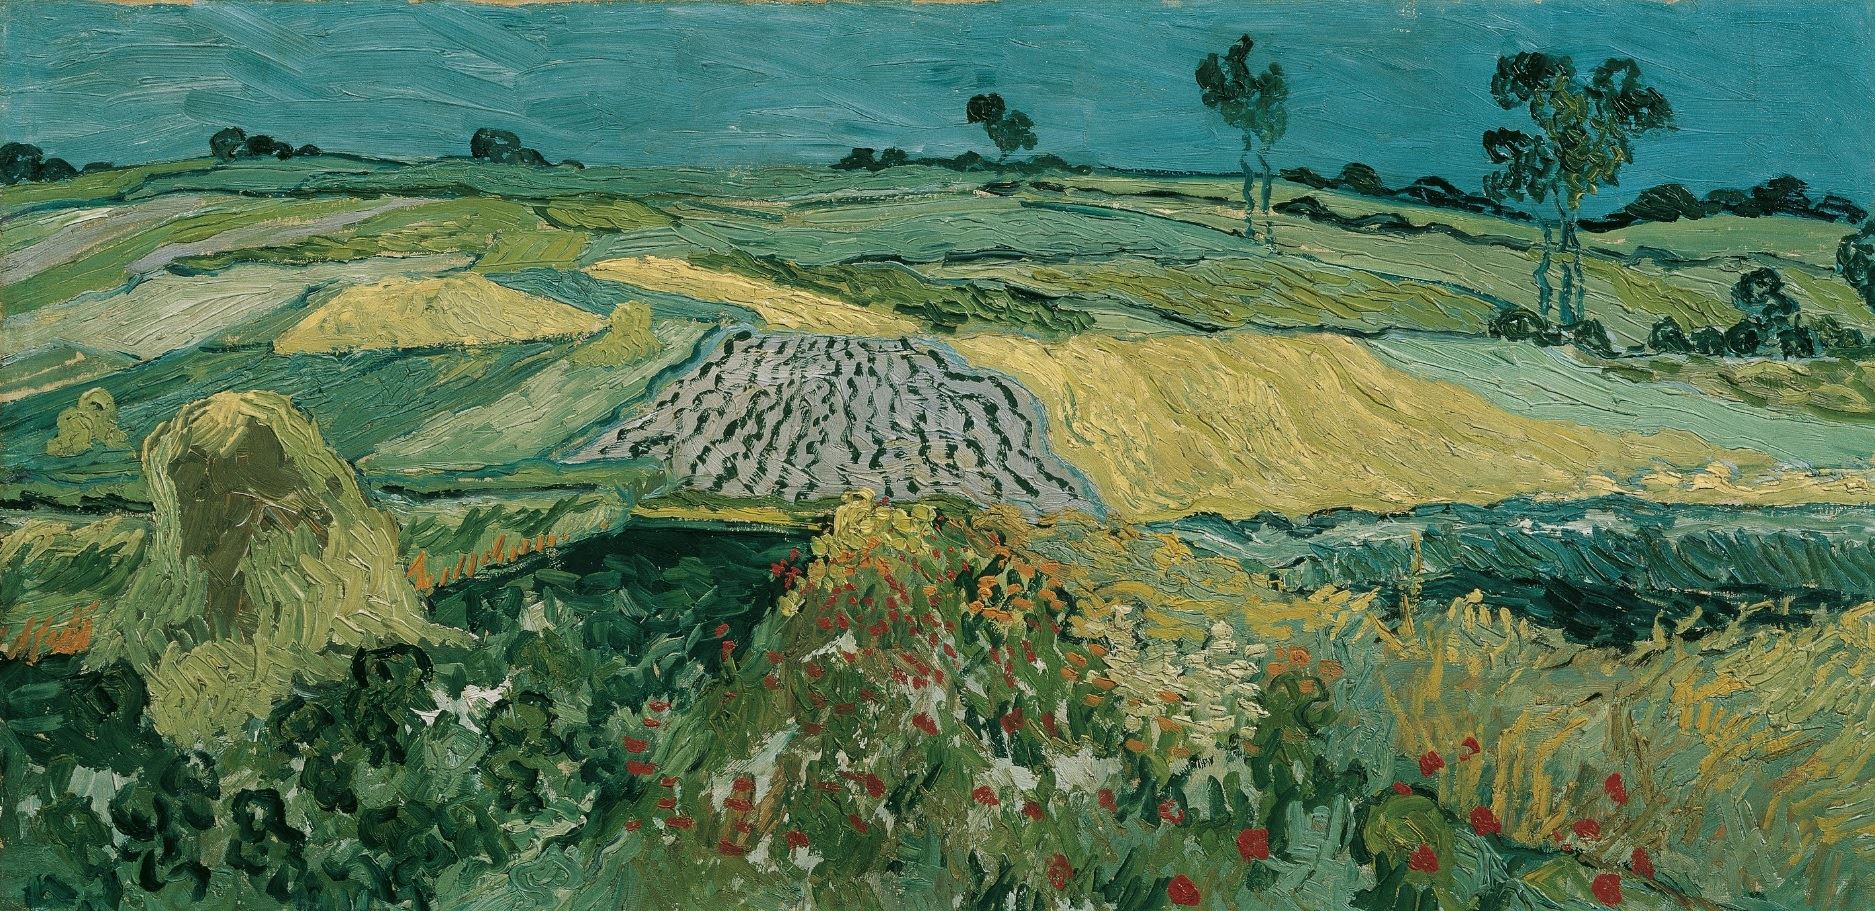 Van Gogh June 1890 Wheat Fields  The Plain of Auvers 22 贴出 0004166.jpeg